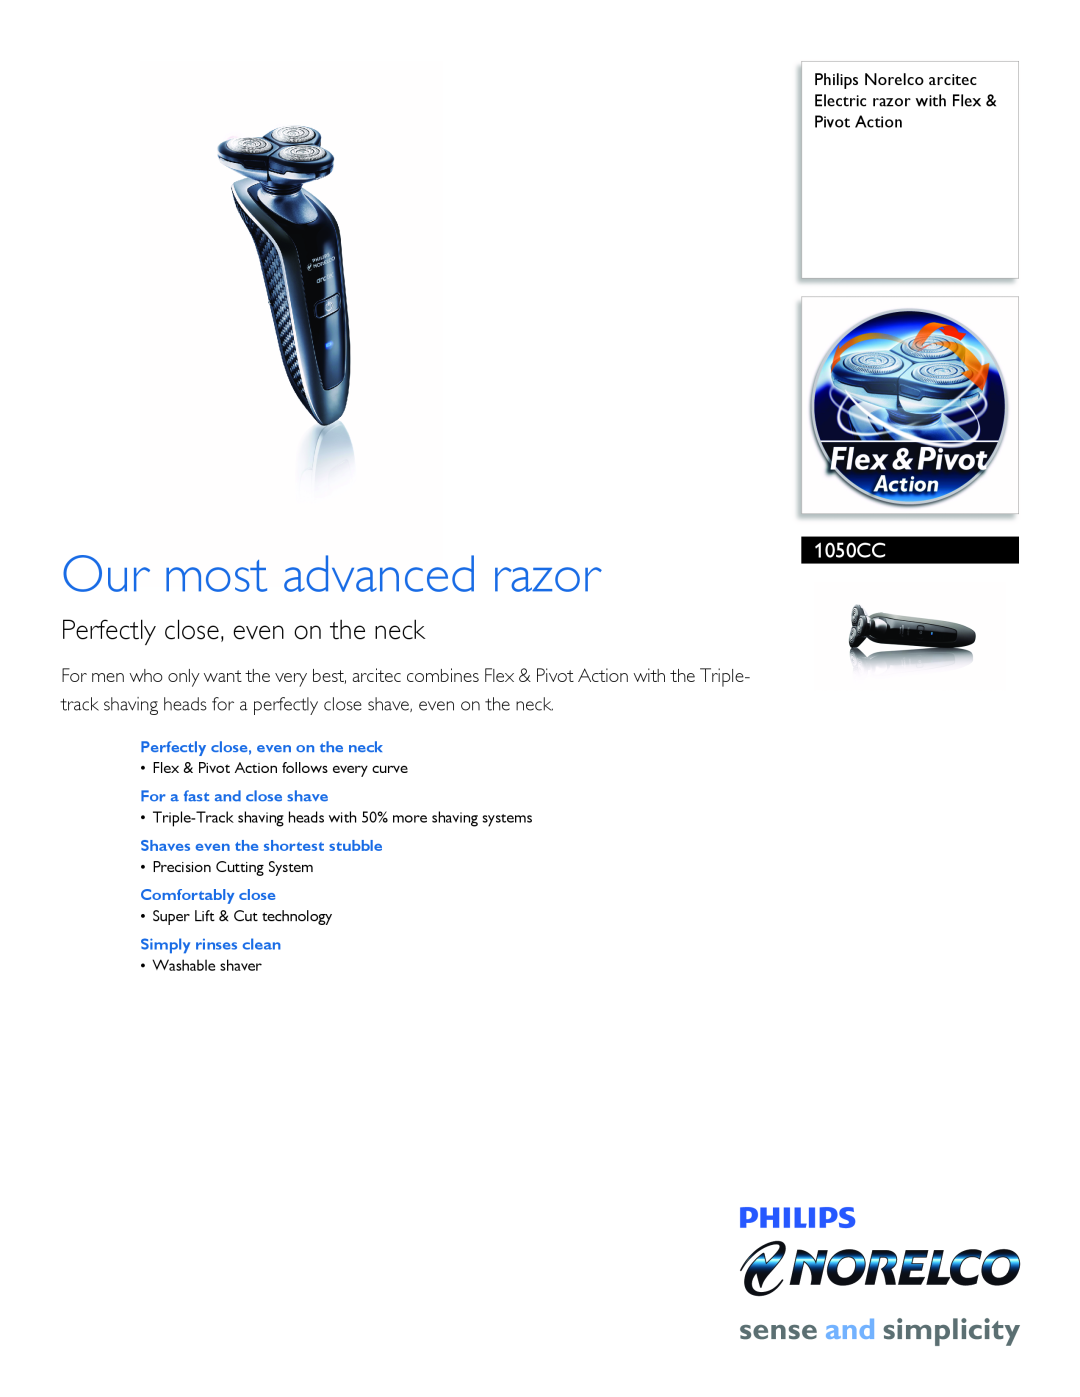 Philips 1050CC manual Philips Norelco arcitec Electric razor with Flex & Pivot Action, Our most advanced razor 